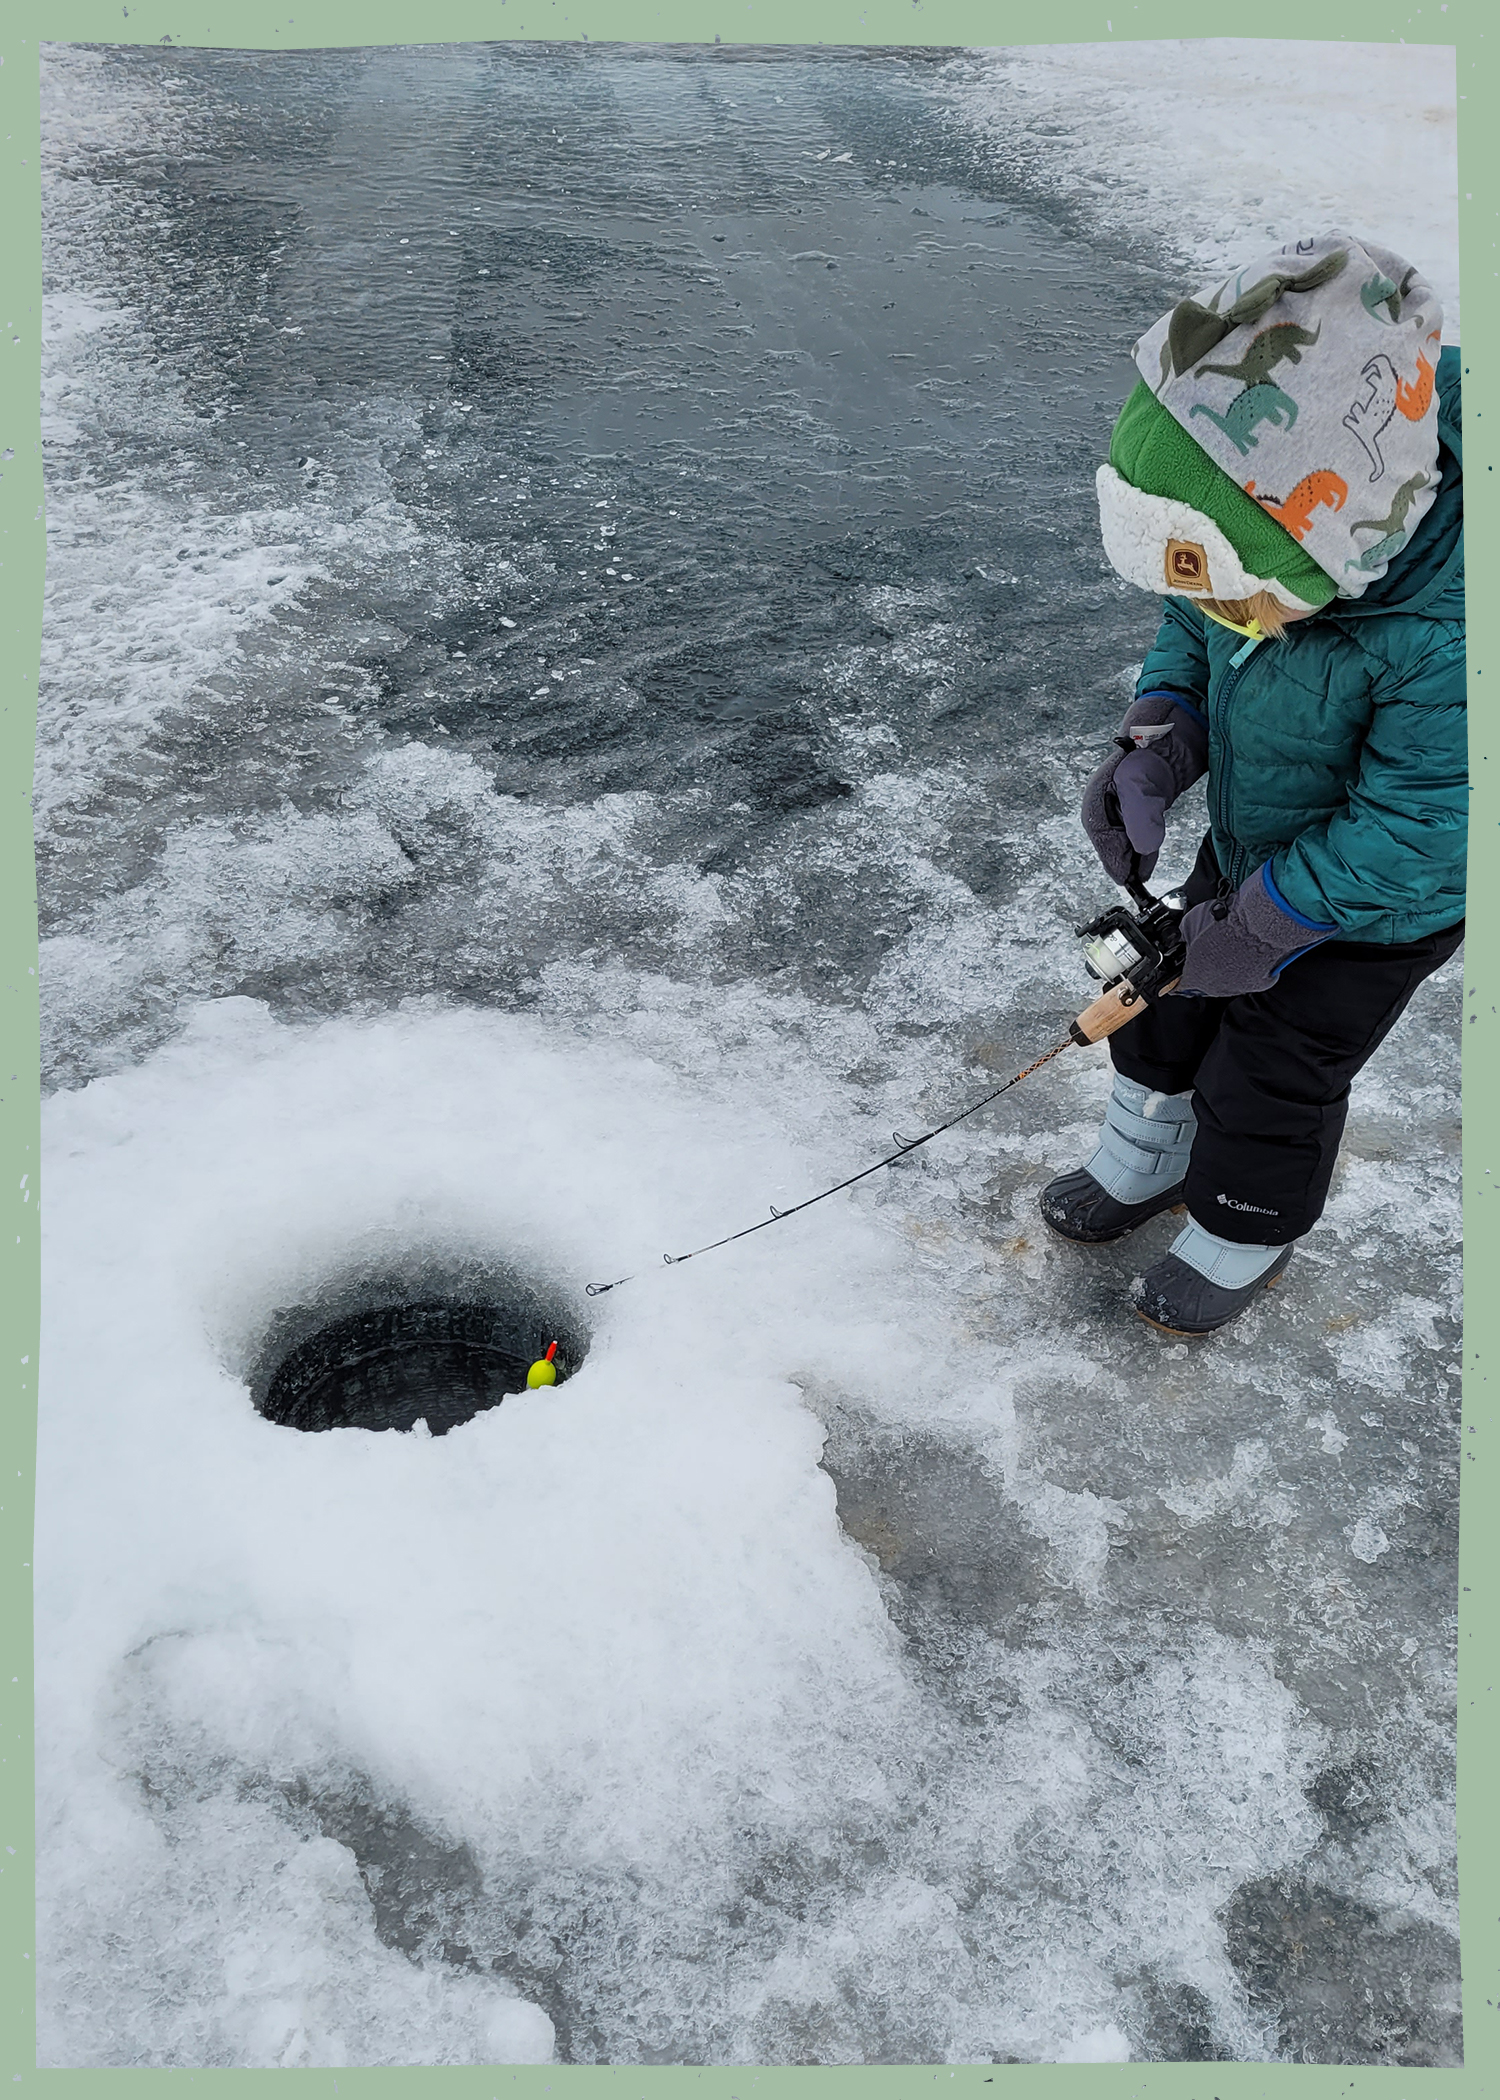 Boy ice fishing